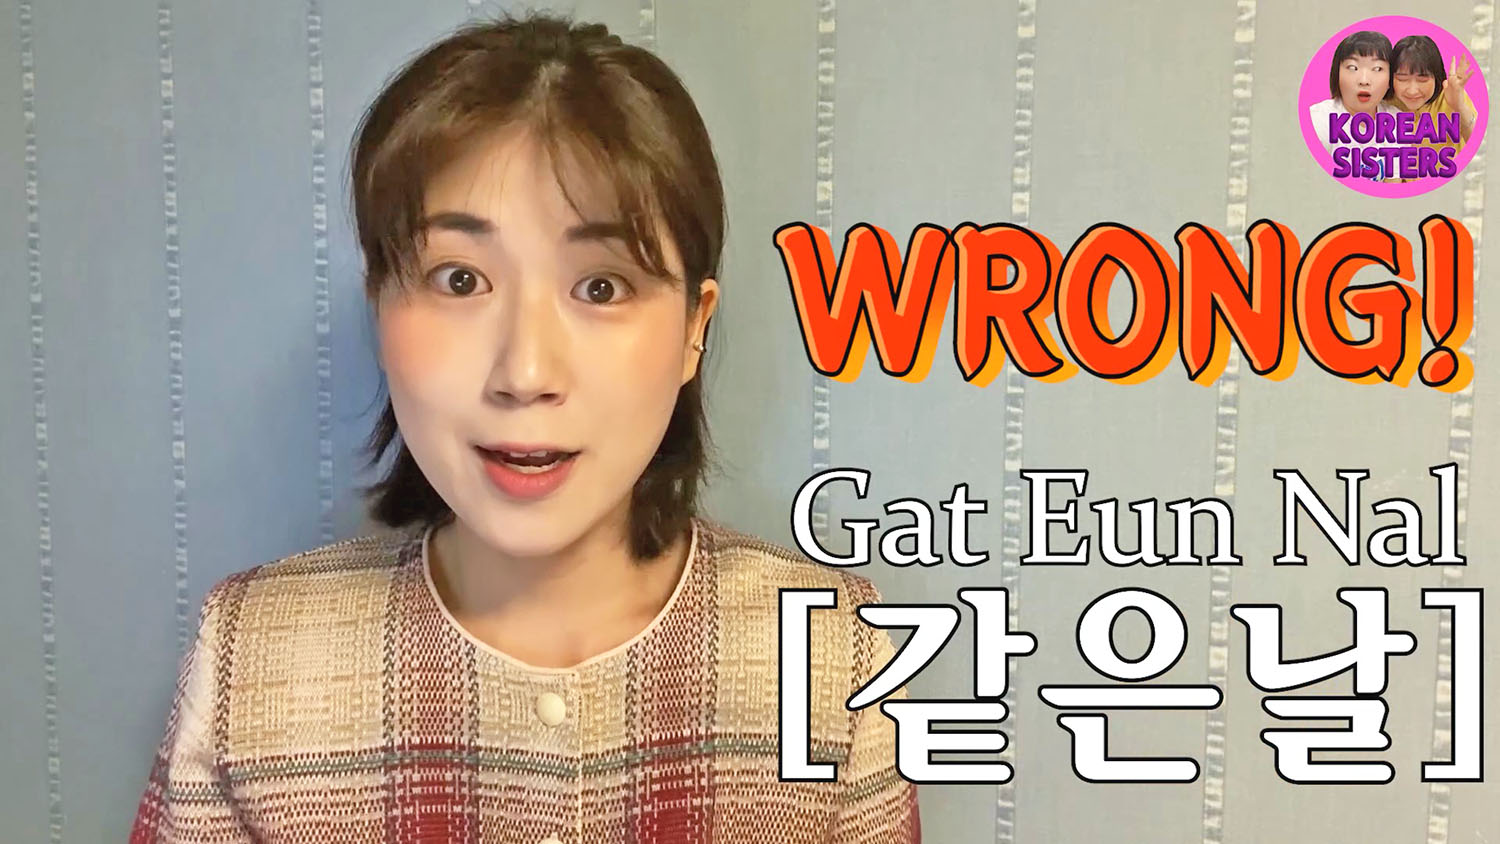 Kpop Easy Lyrics Kpopers Having Trouble Pronouncing Korean Lyrics Hab Korea Net